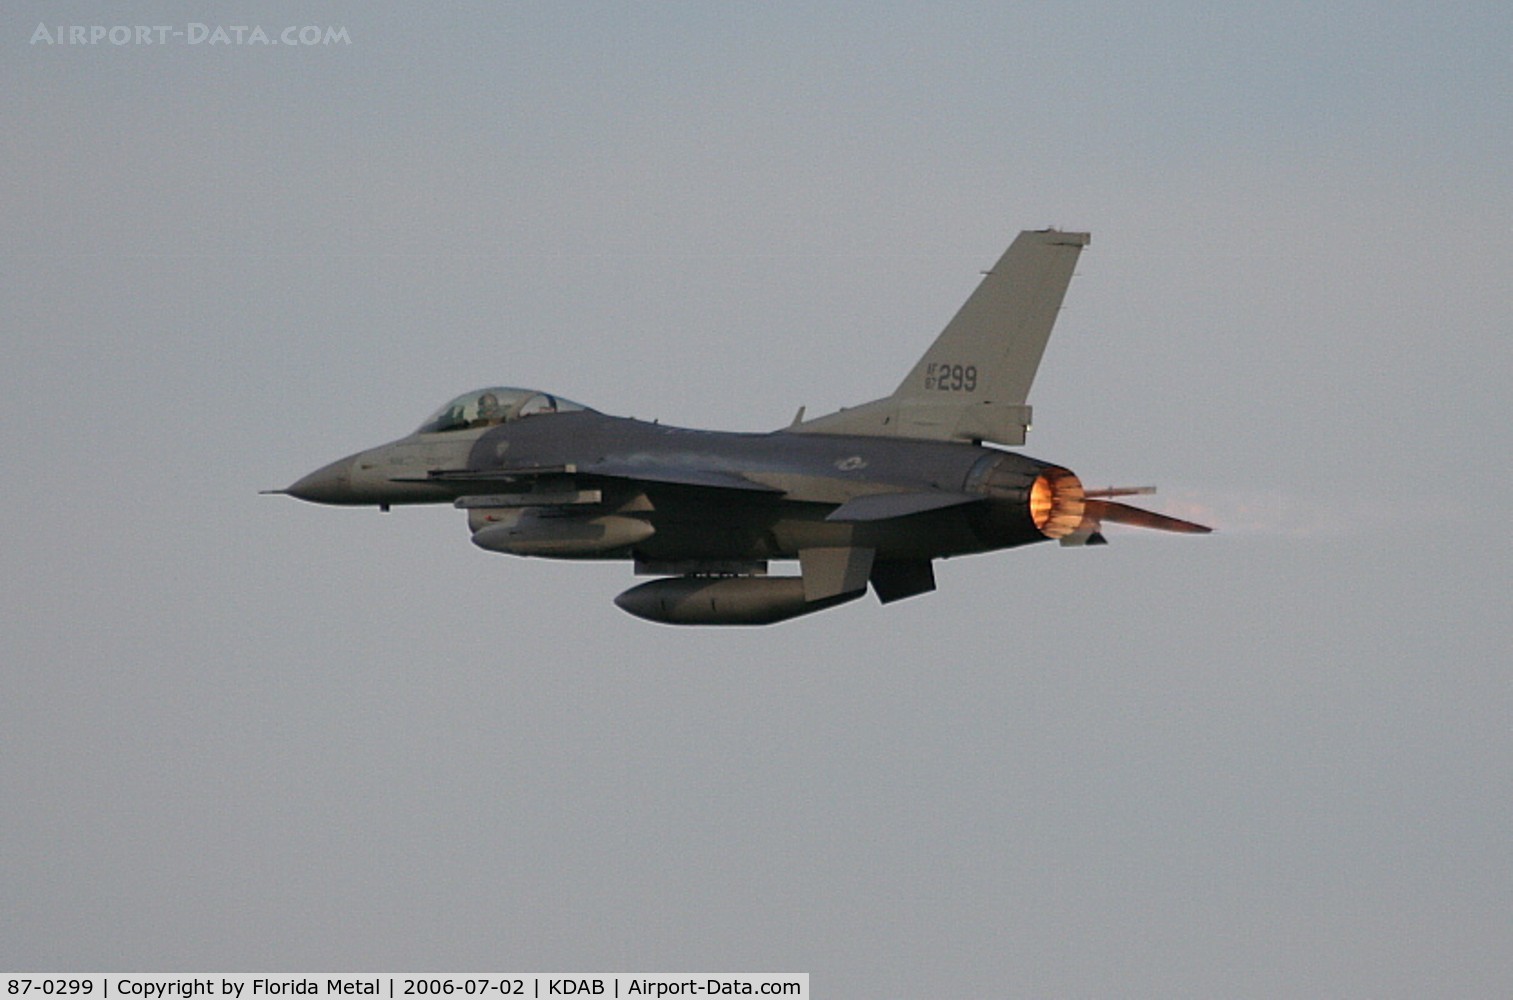 87-0299, 1987 General Dynamics F-16C Fighting Falcon C/N 5C-560, DAB zx